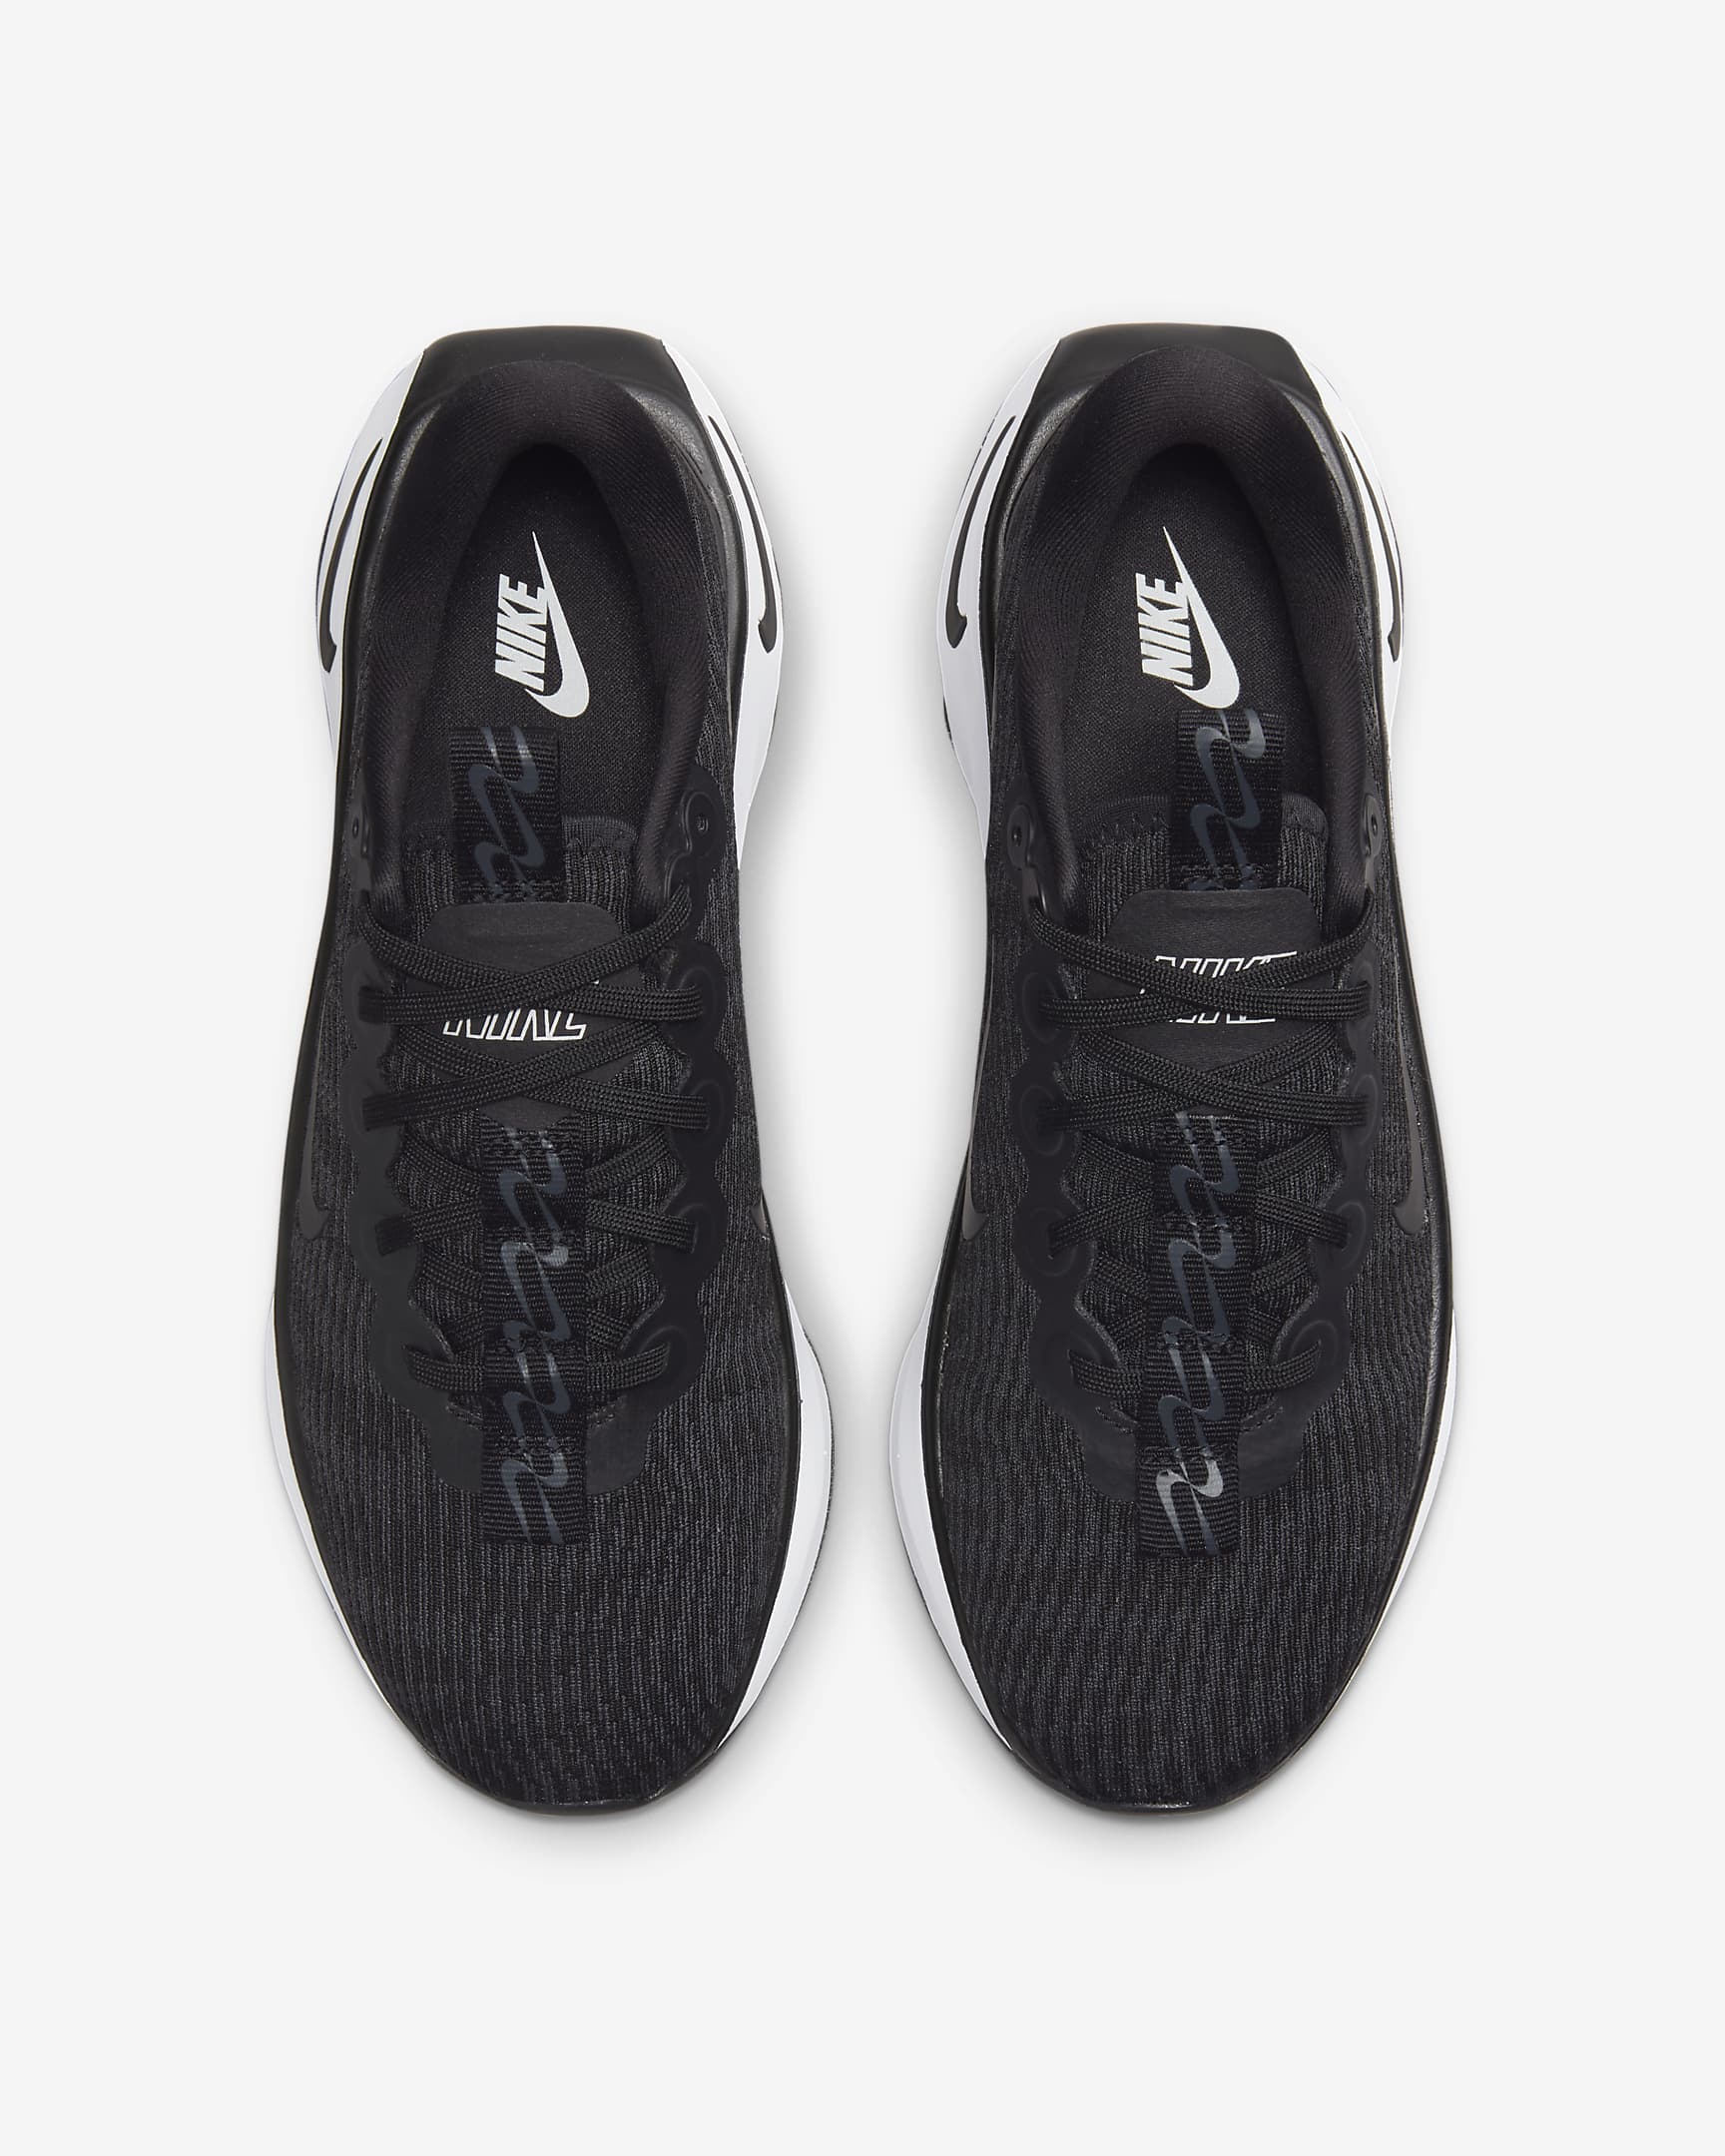 Nike Motiva Women's Walking Shoes - Black/Anthracite/White/Black